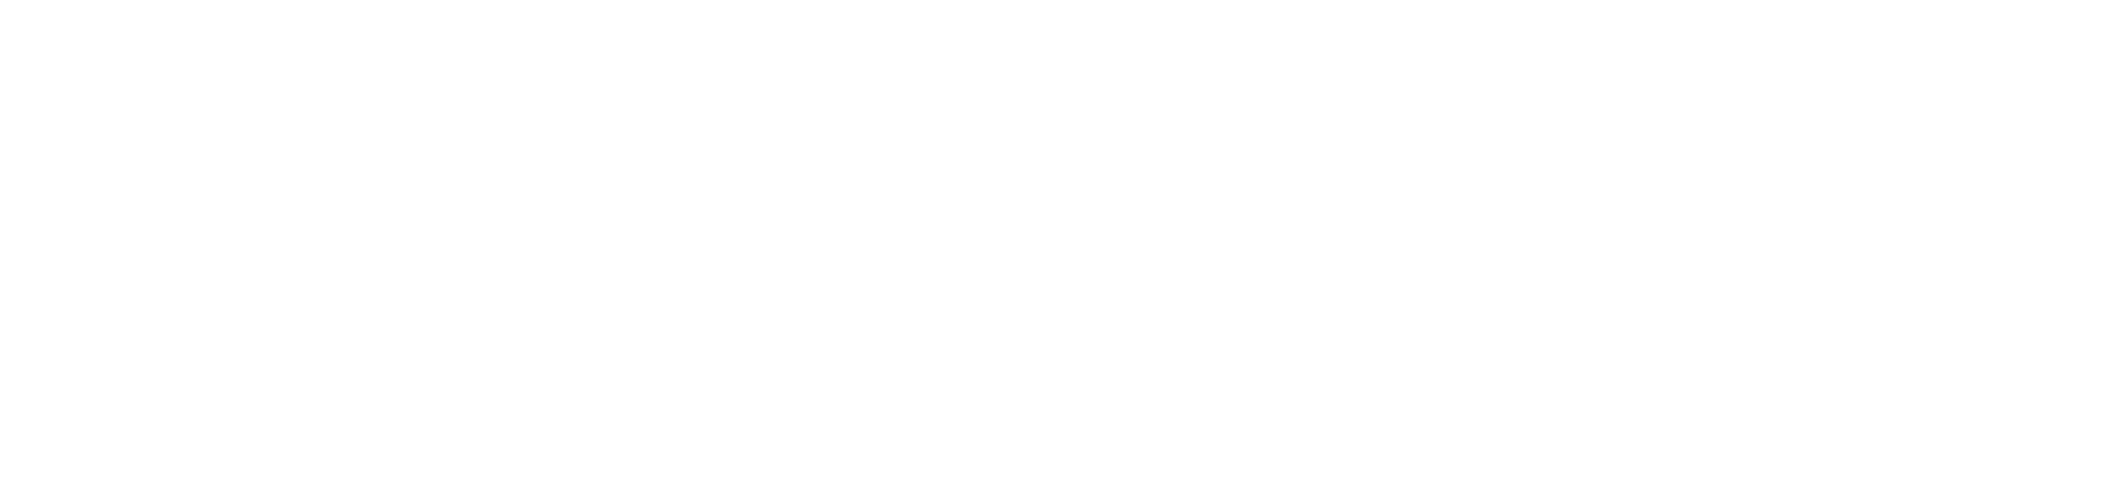 Cash Volt logo